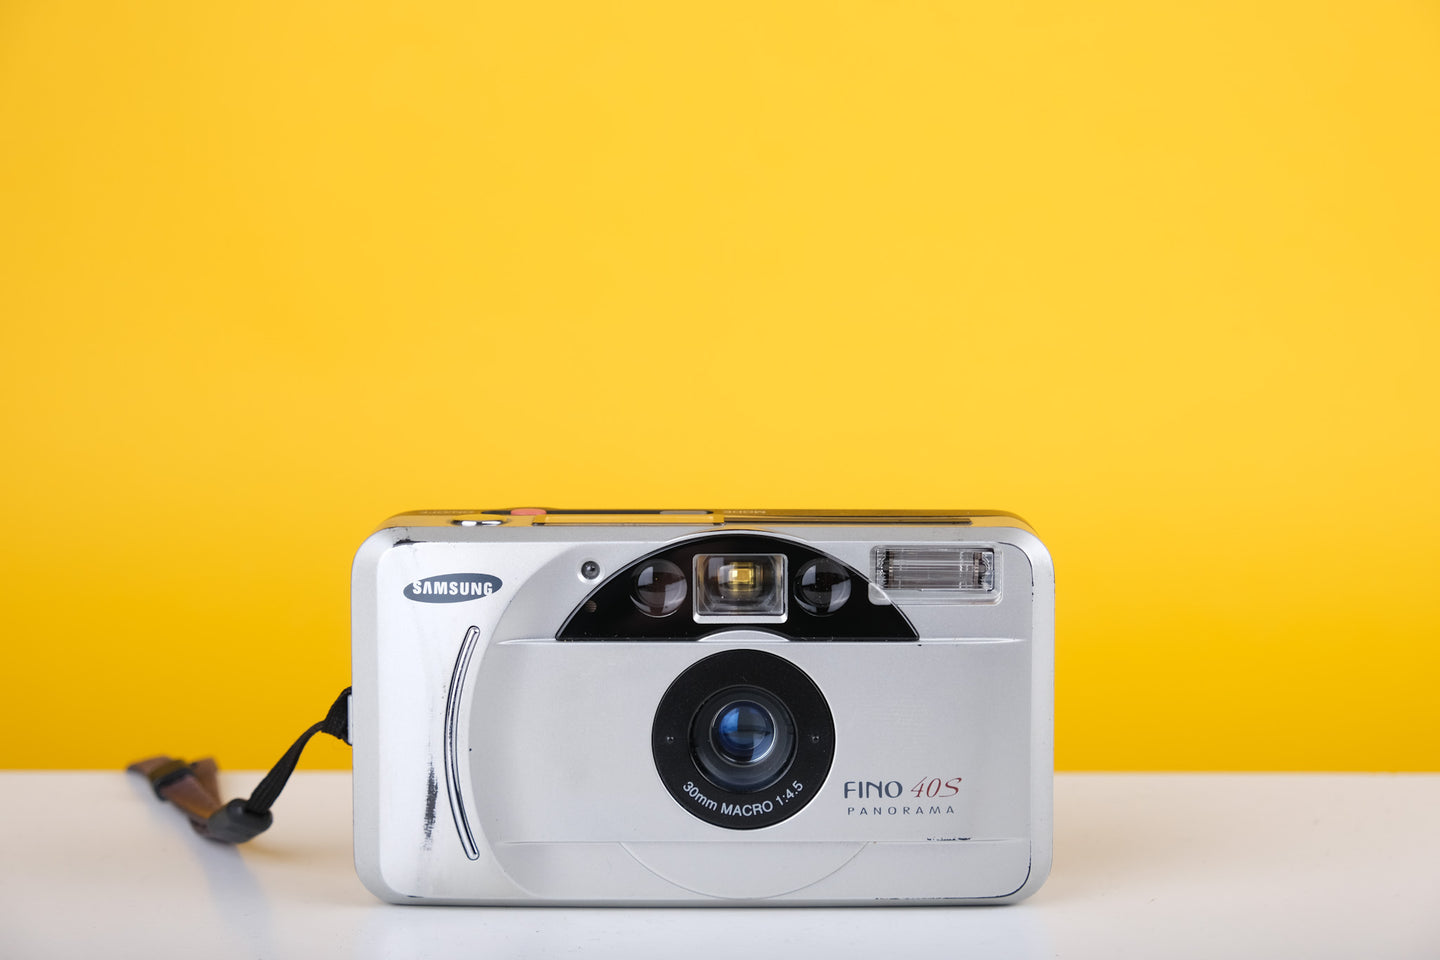 Samsung Fino 40S Panorama 35mm Point and Shoot Film Camera